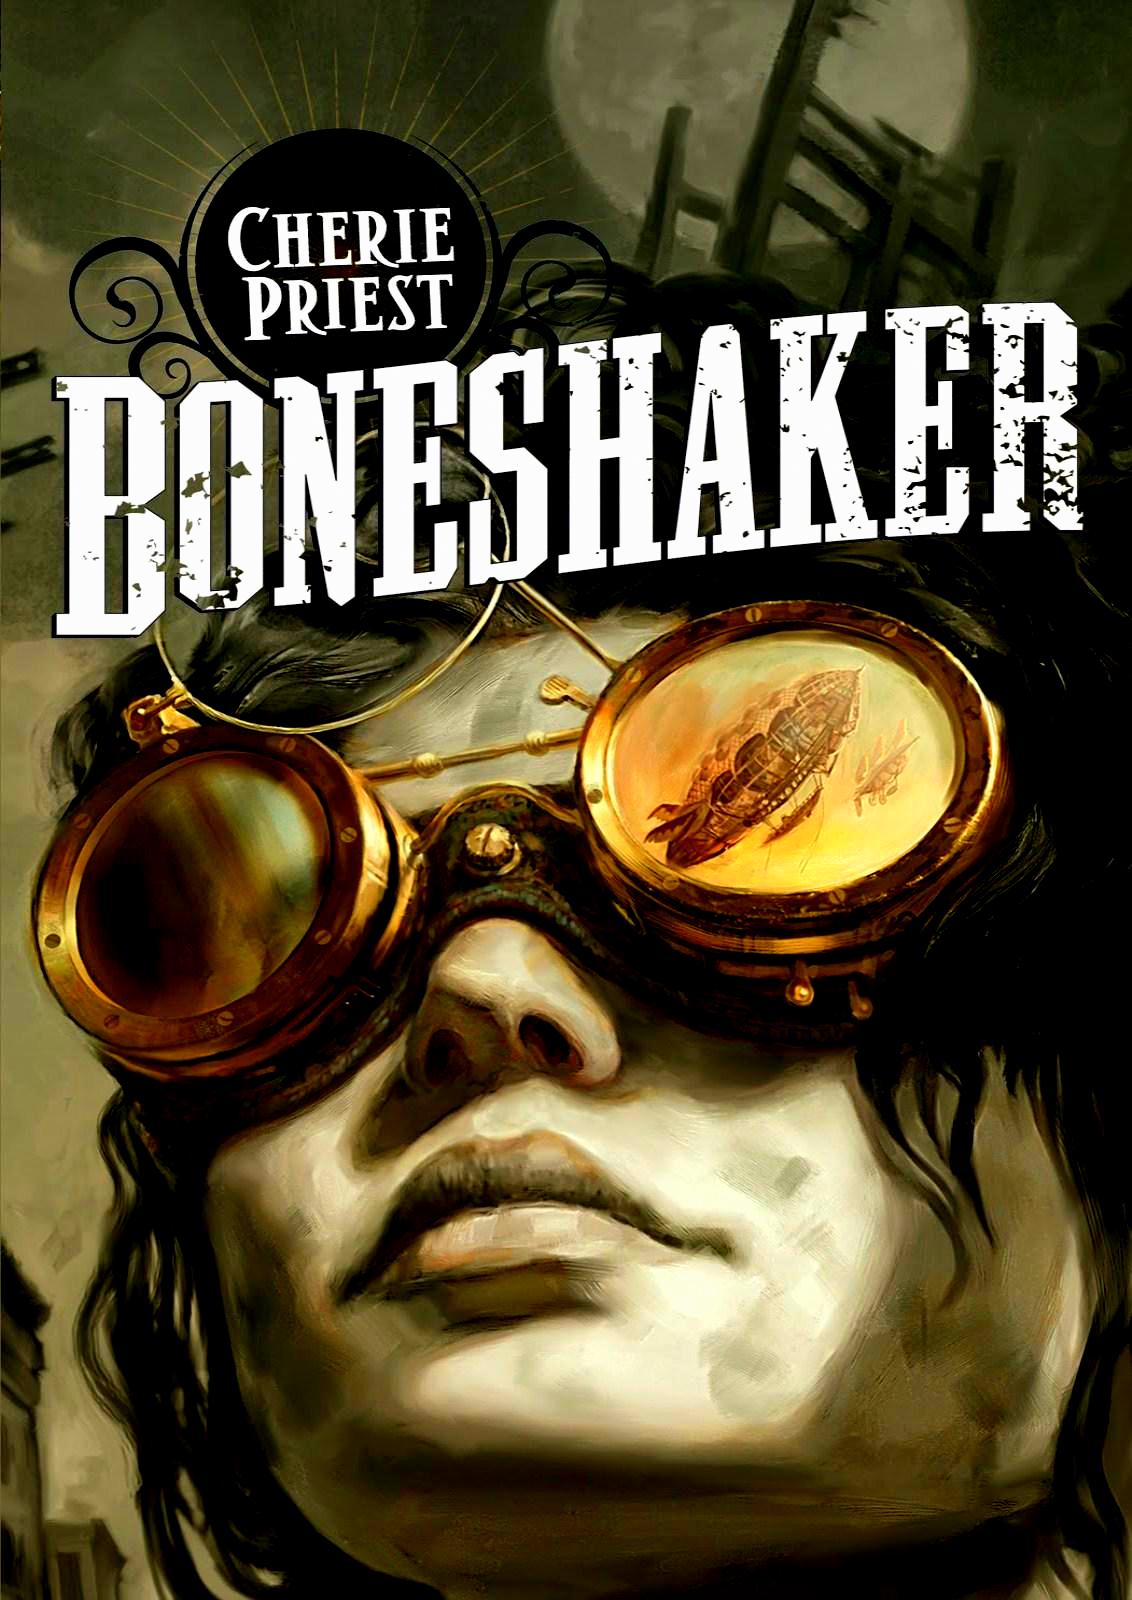 Download livro Boneshaker Cherie Priest em Epub mobi e PDF1